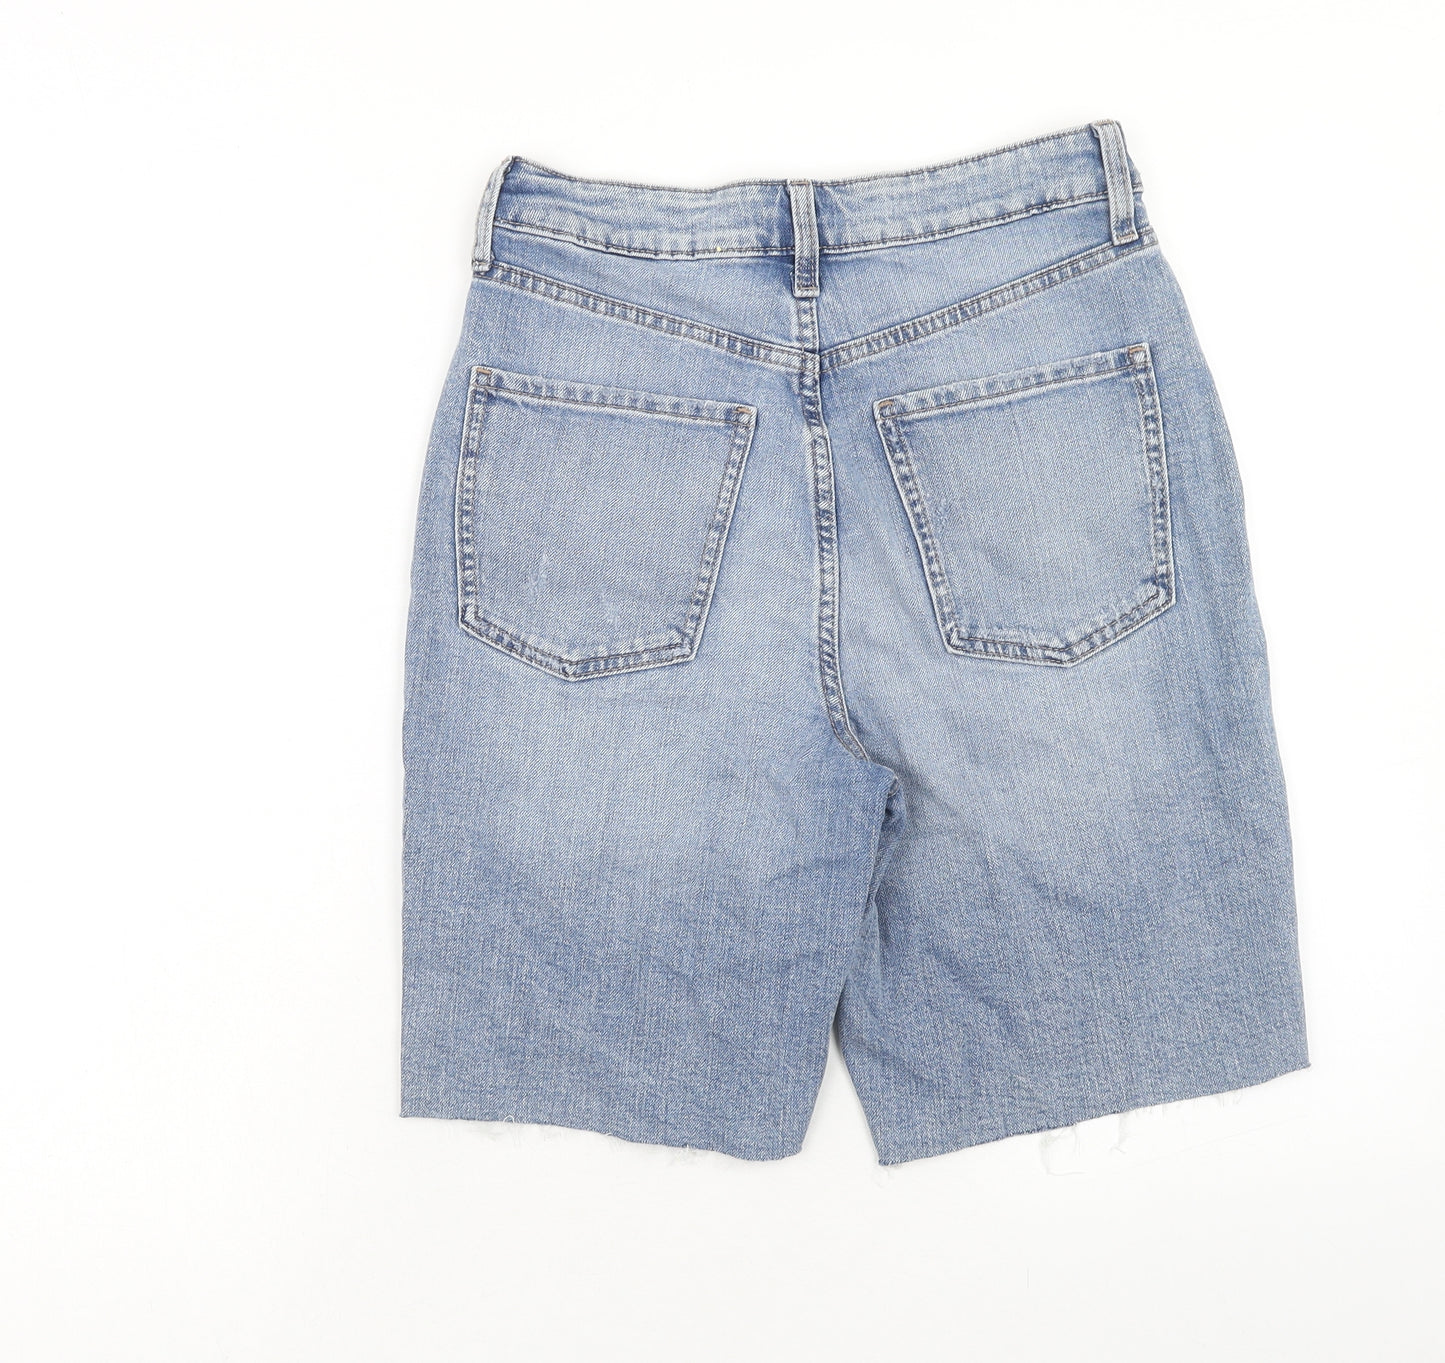 Marks and Spencer Womens Blue Cotton Bermuda Shorts Size 6 Regular Zip